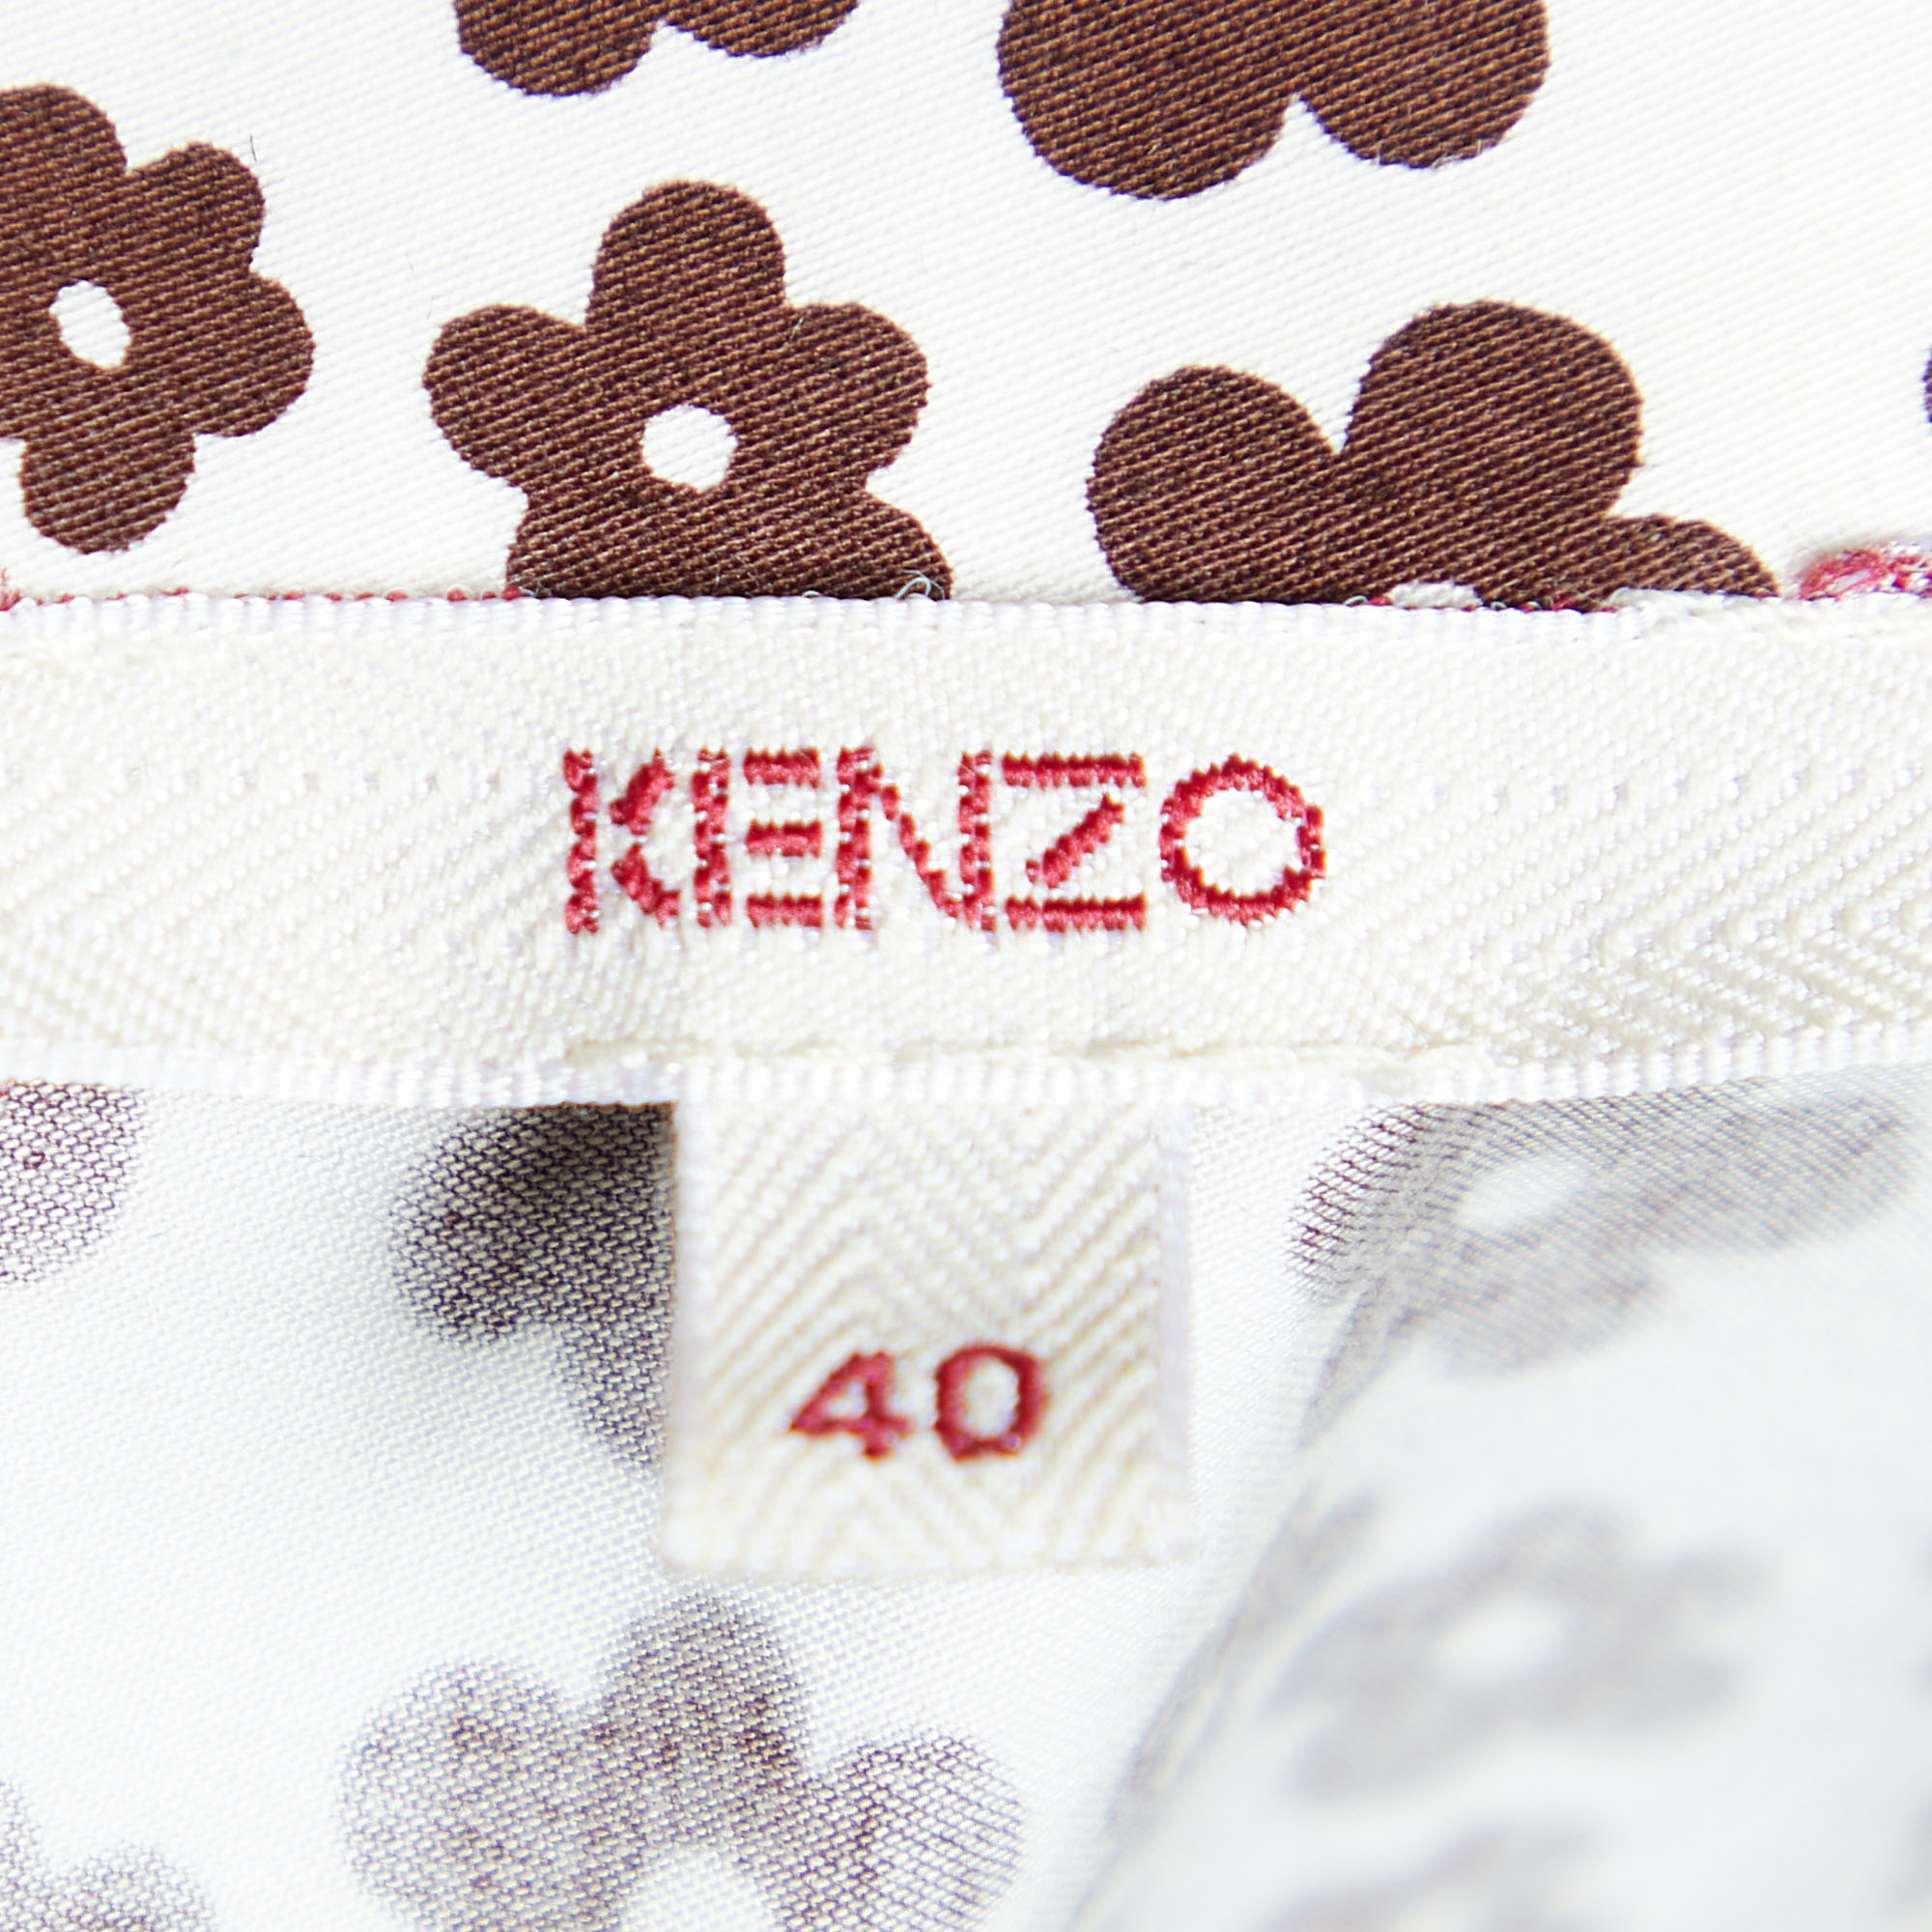 Kenzo Brown Floral Printed Cotton Waist Tie Detail Top M